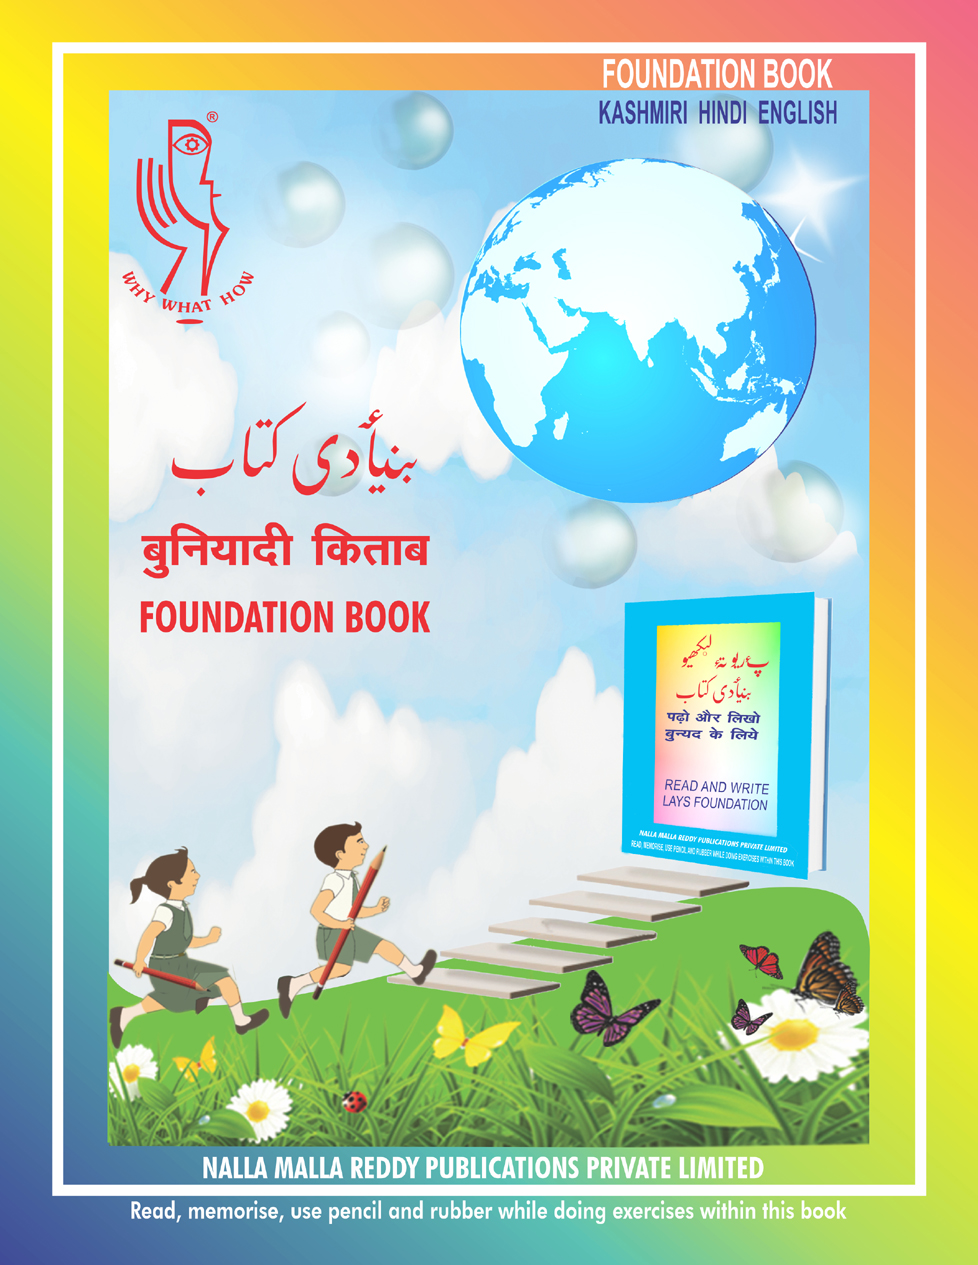 Kashmiri Hindi English Alphabets Foundation Book 3 in 1 Tittle website